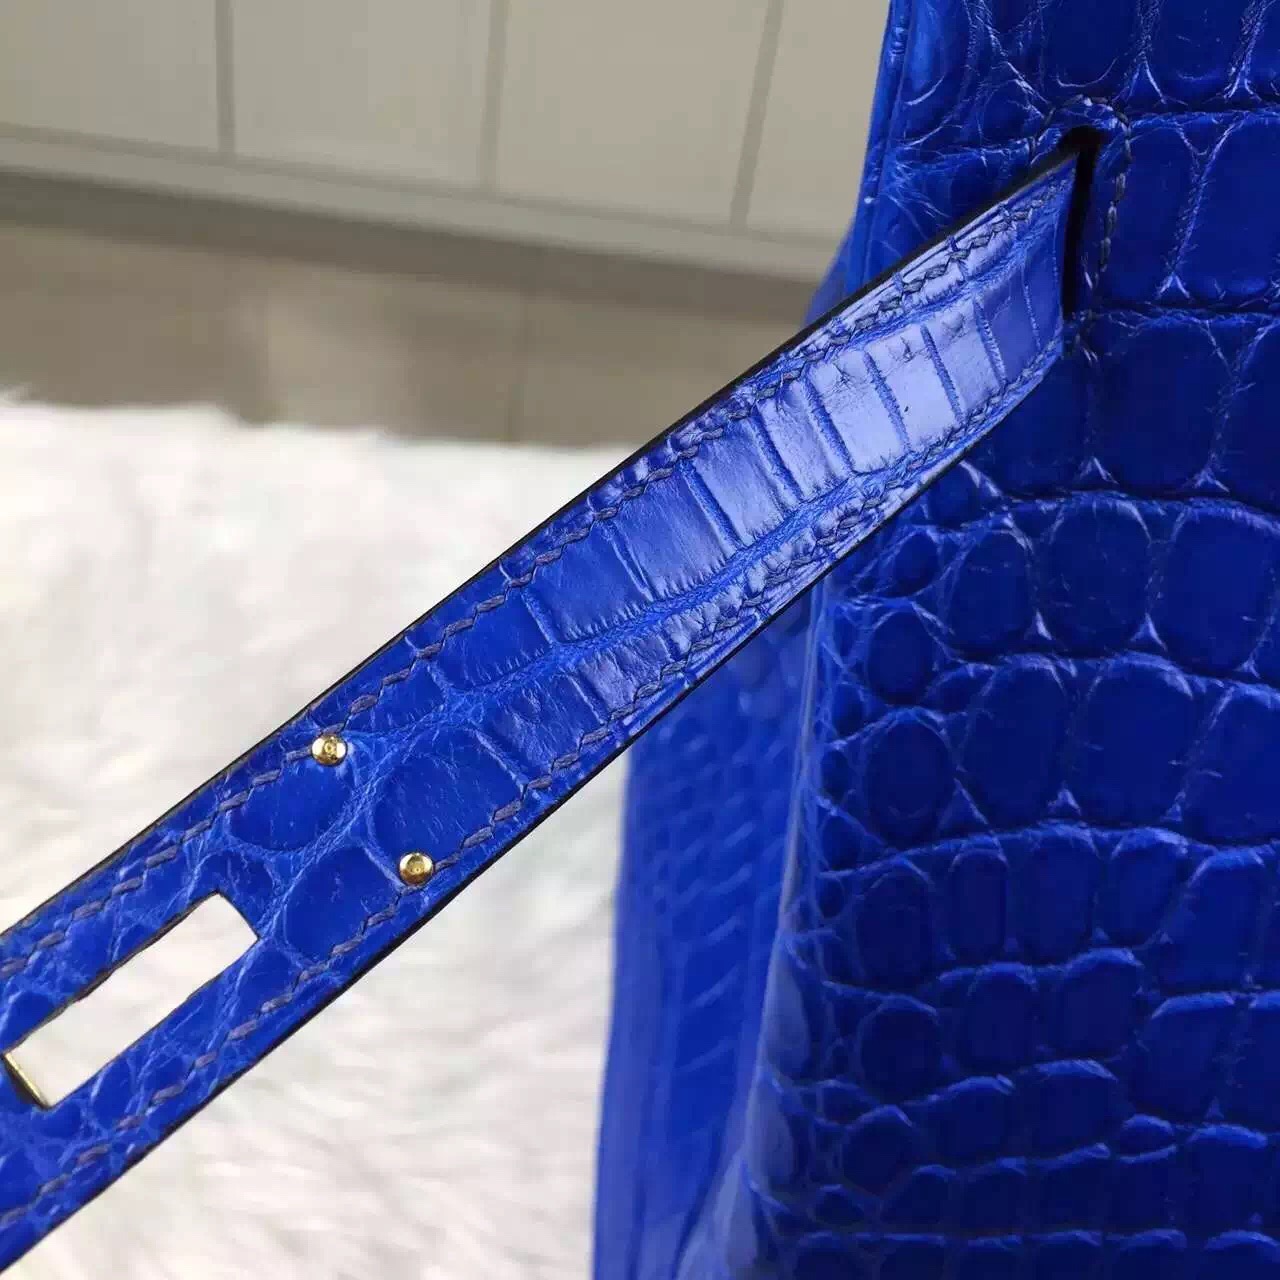 Customized Hermes Crocodile Matt Leather Birkin Bag35cm in 7T Blue Electric